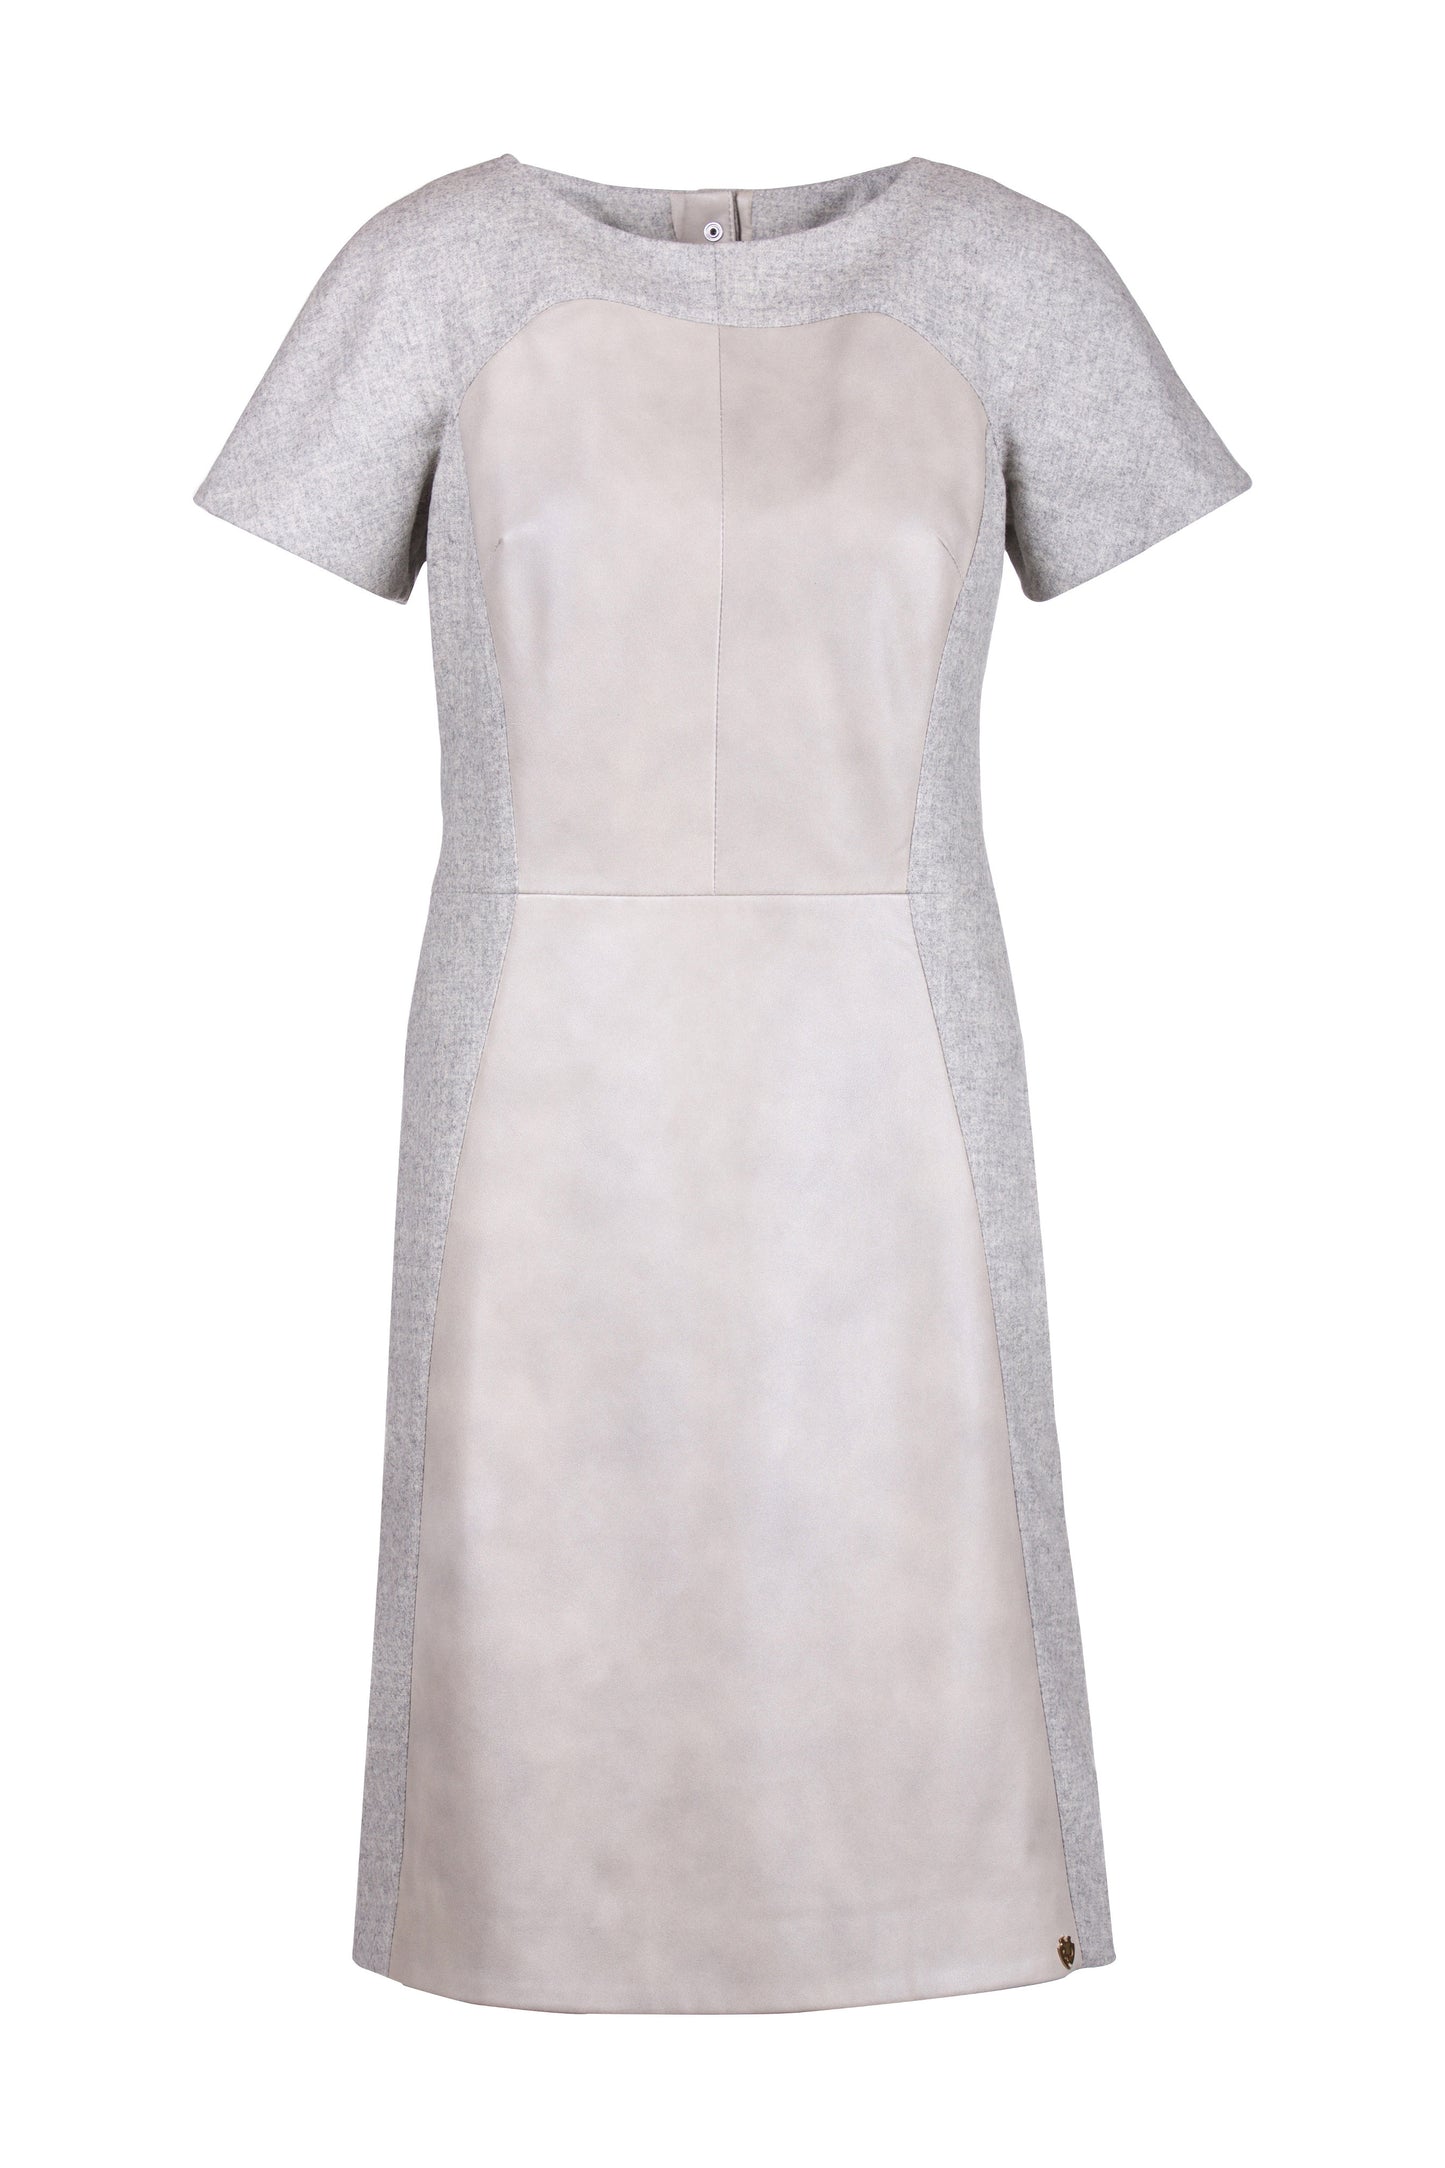 Merino Wool Reindeer Leather Dress- Limited Edition